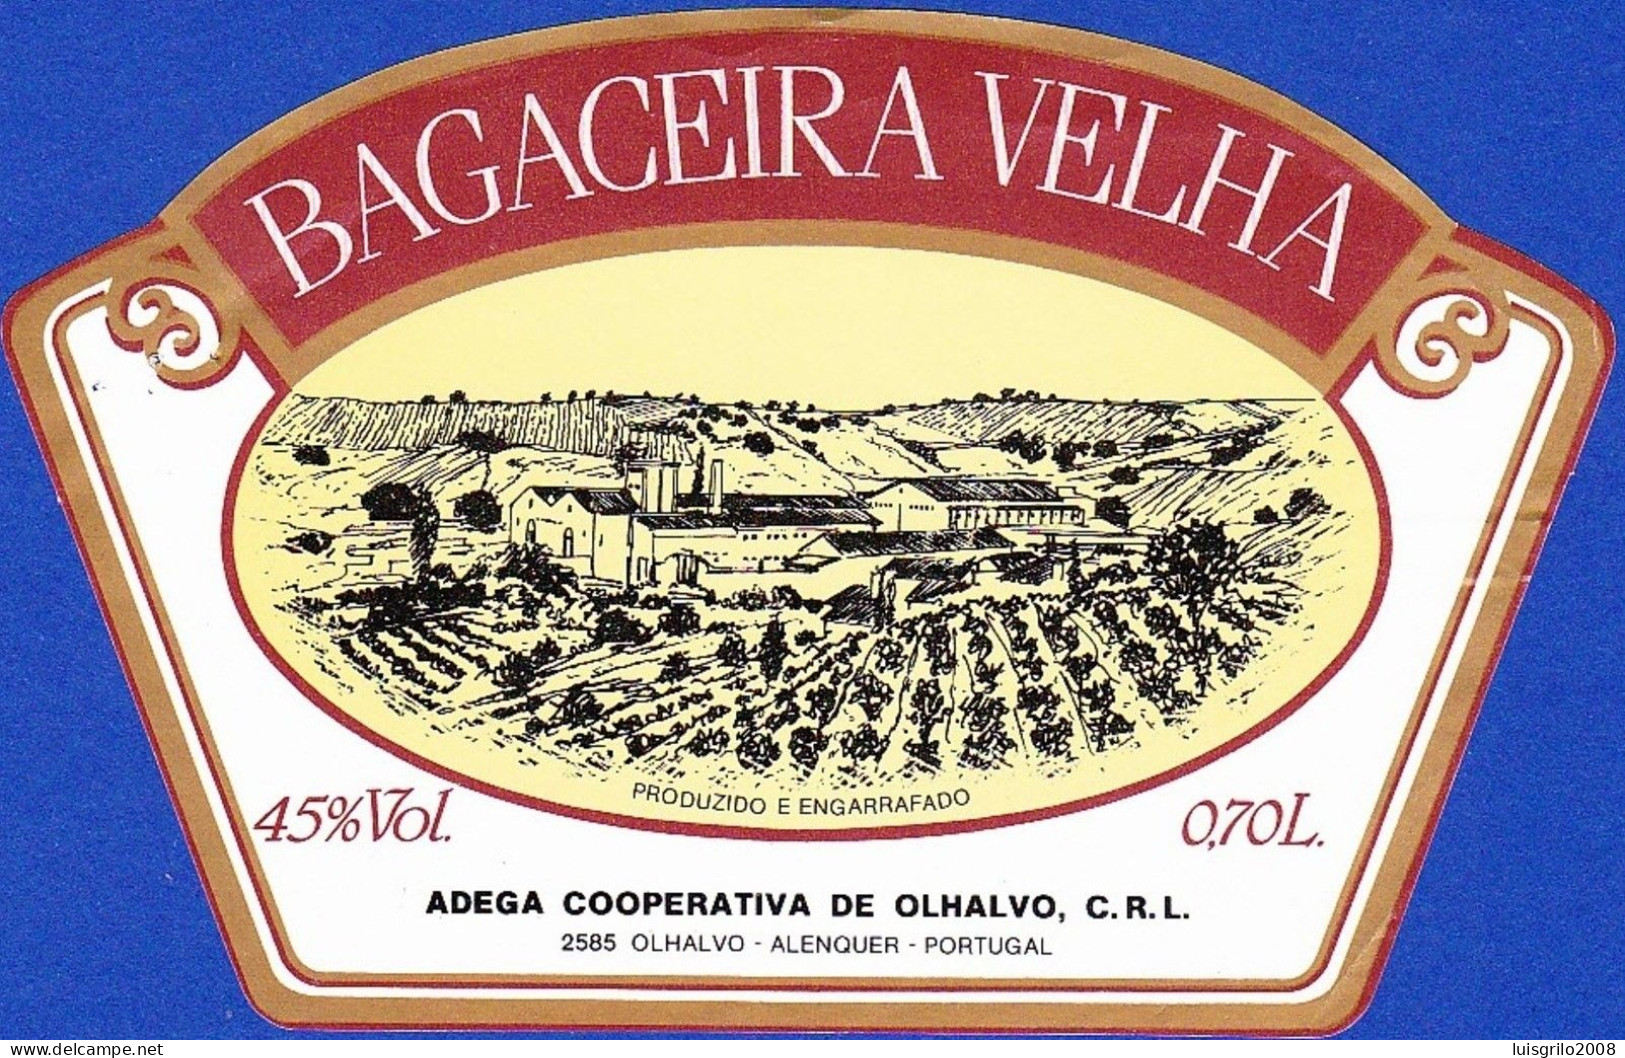 Brandy Label, Portugal - BAGACEIRA VELHA. Adega Cooperativa De Olhalvo.  Alenquer - Alkohole & Spirituosen